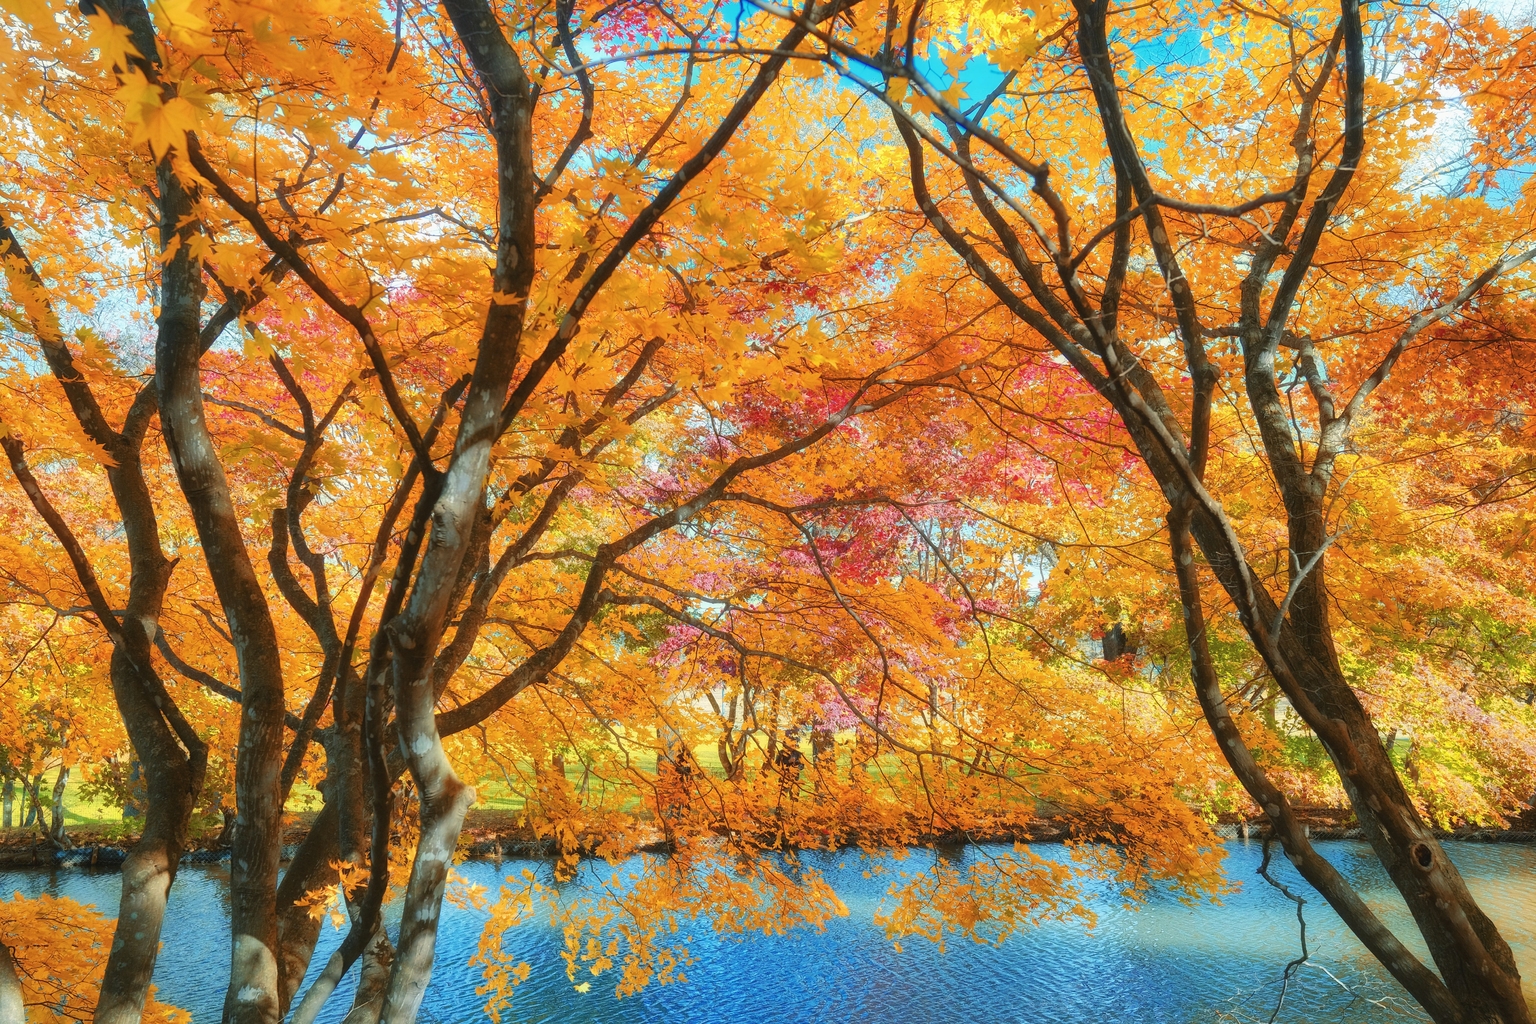 Shimizu park Fall foliage in Chiba